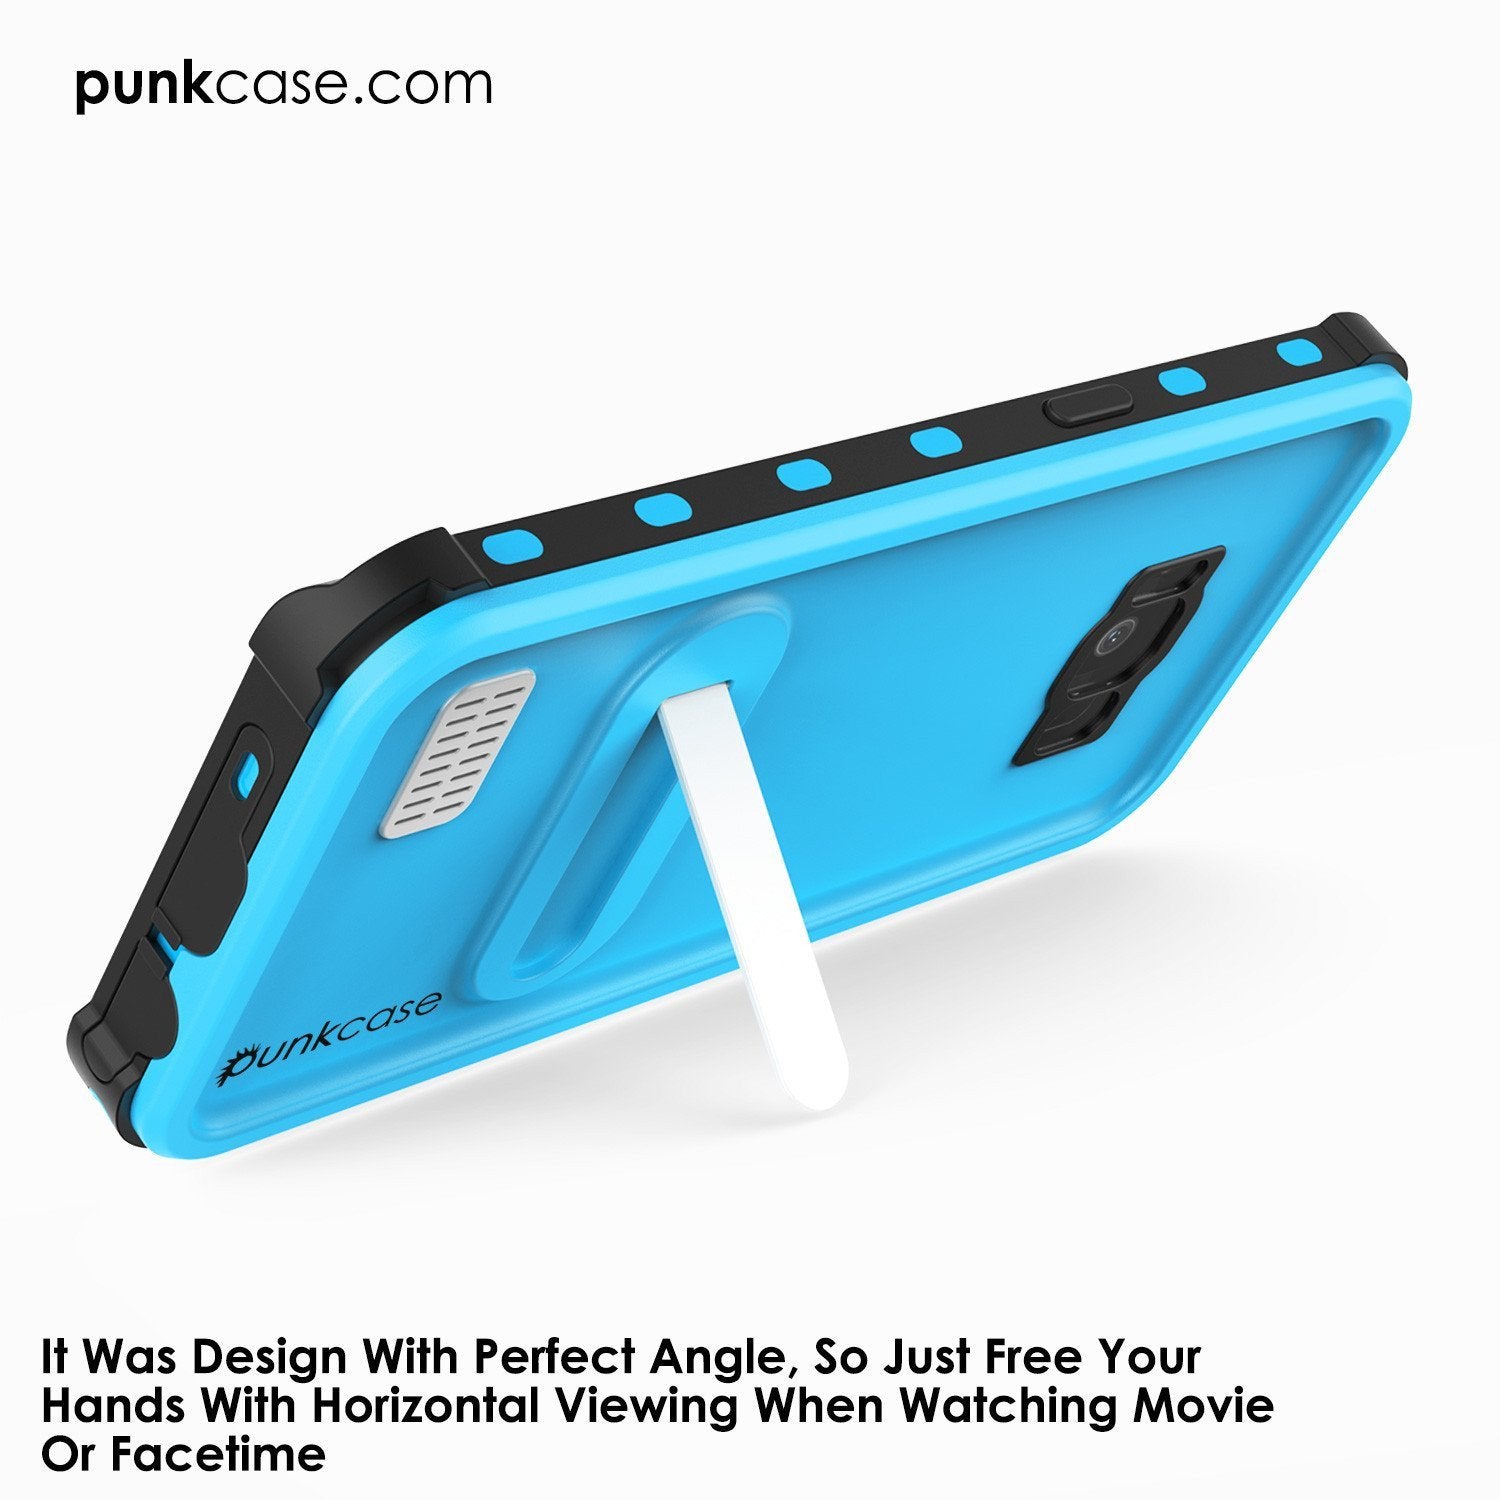 Protector [PURPLE]Galaxy S8 Waterproof Case, Punkcase [KickStud Series] [Slim Fit] [IP68 Certified] [Shockproof] [Snowproof] Armor Cover [Light Blue] - PunkCase NZ